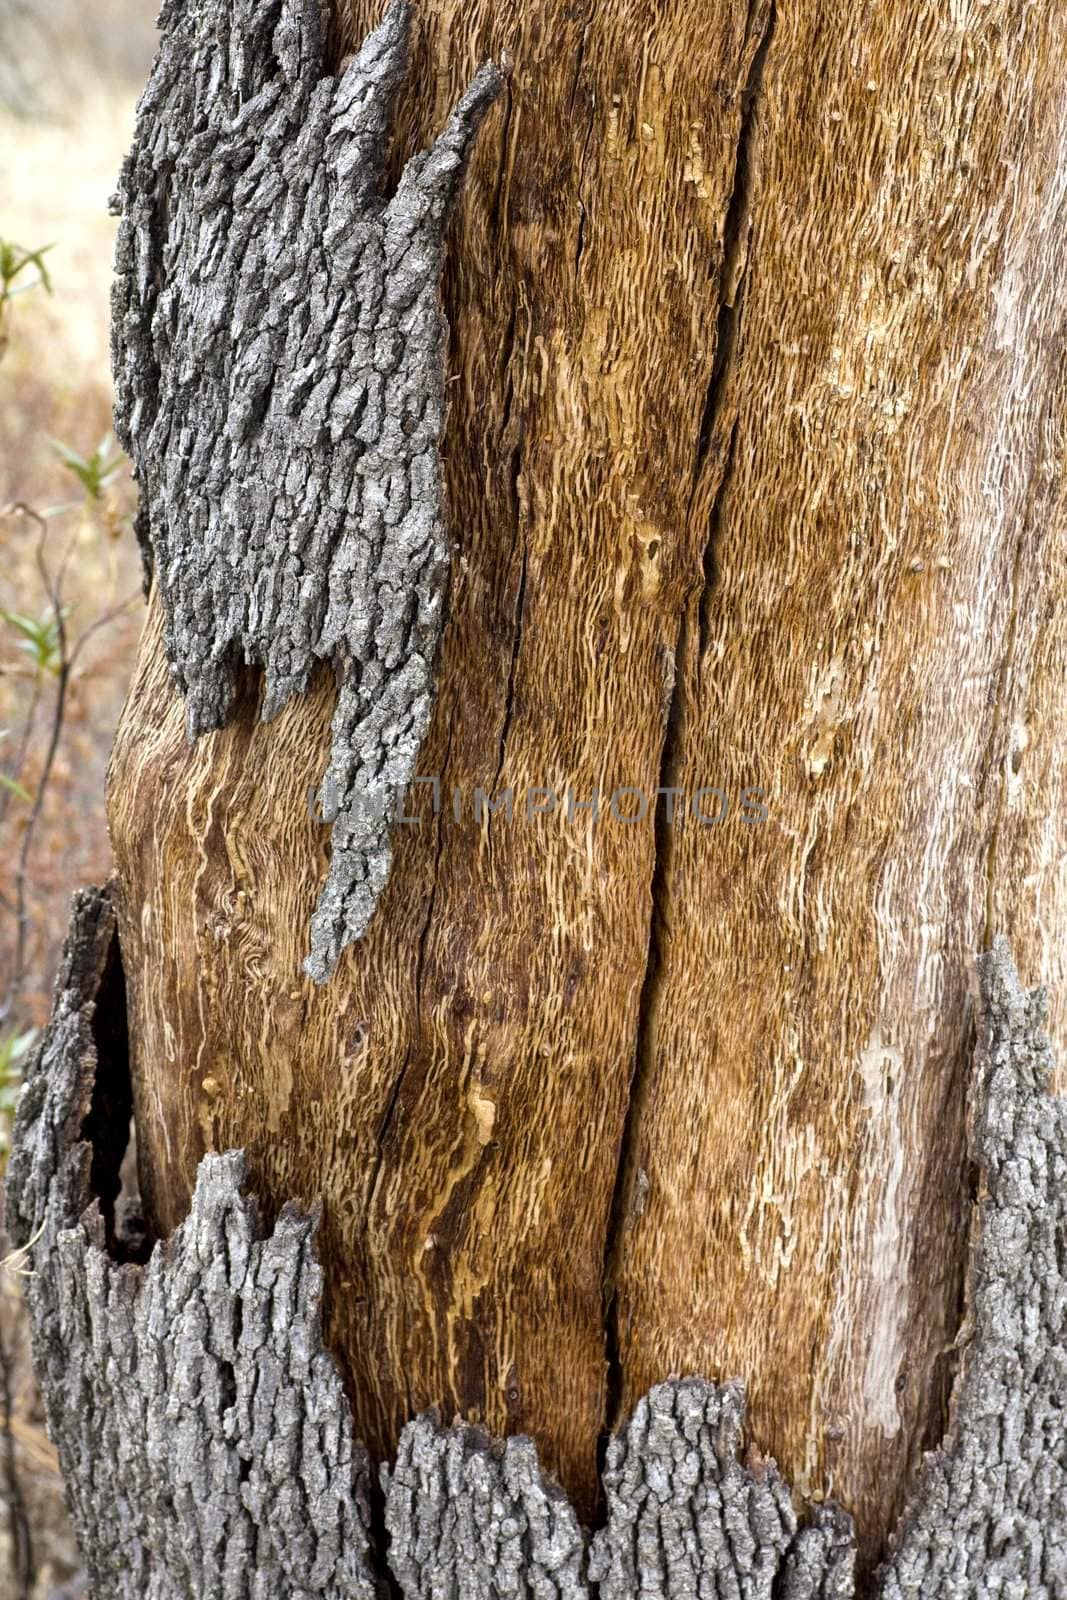 Quercus suber bark texture by membio